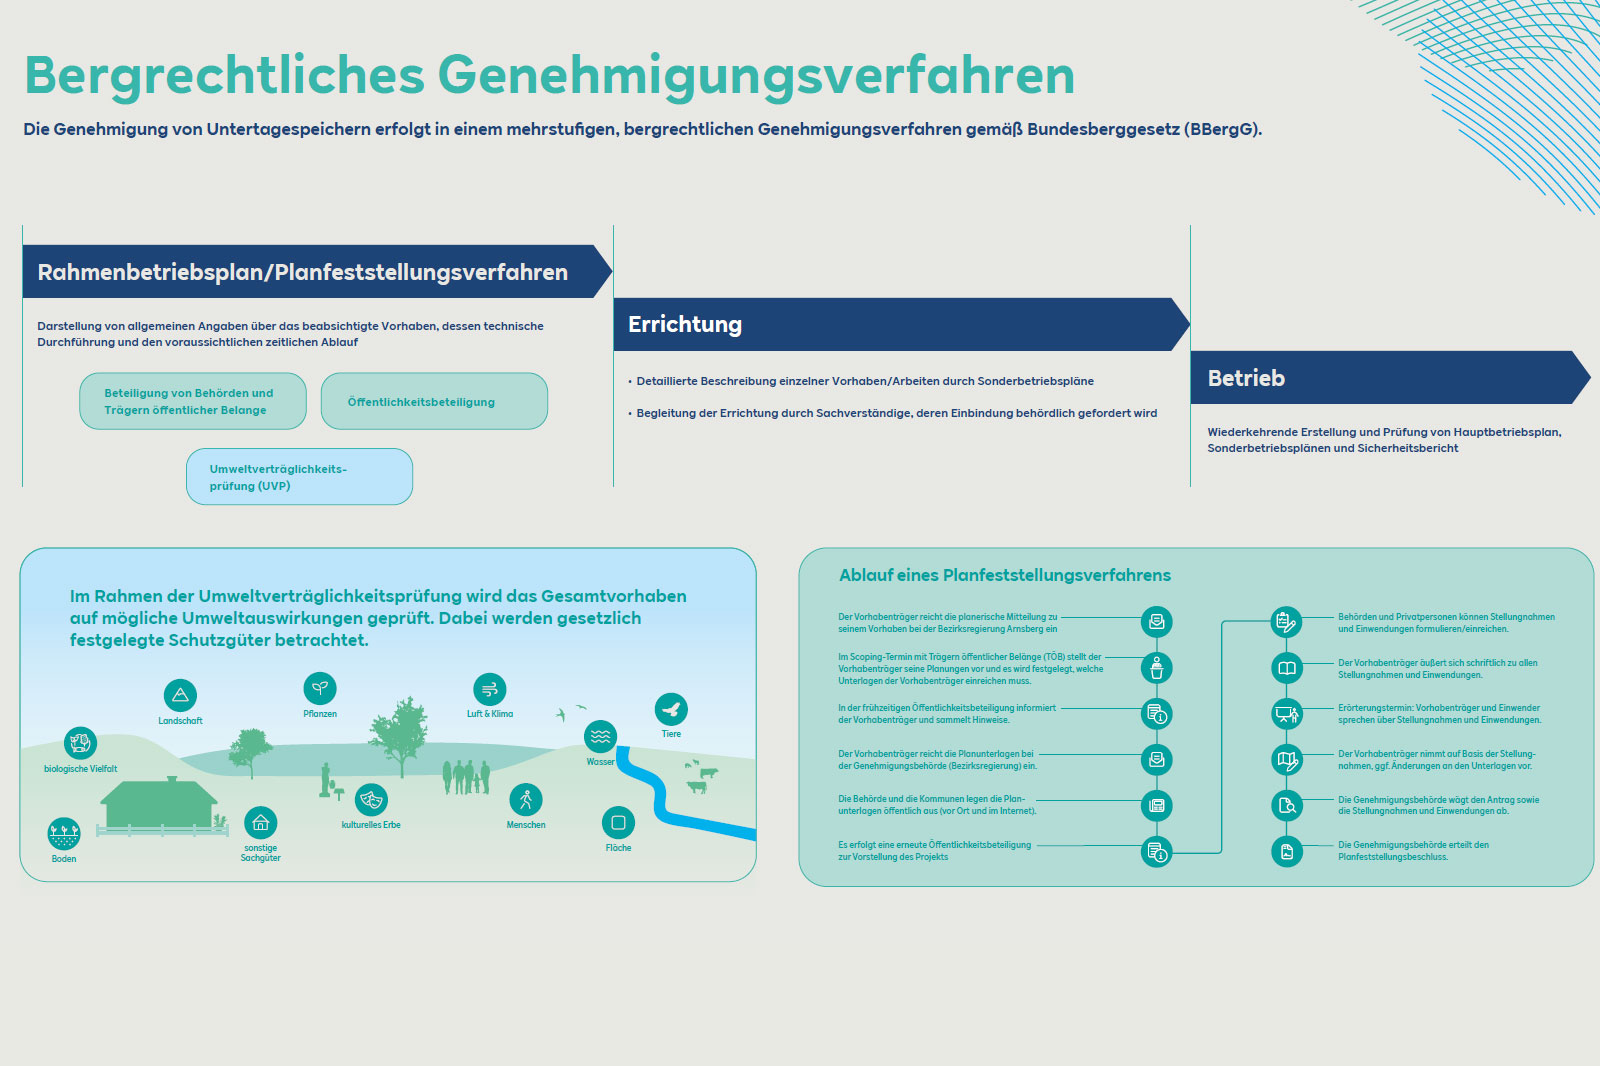 Infographic: mining licensing procedures – Dialog event 9 June 2022 | Hydrogen RWE Gas Storage West GmbH